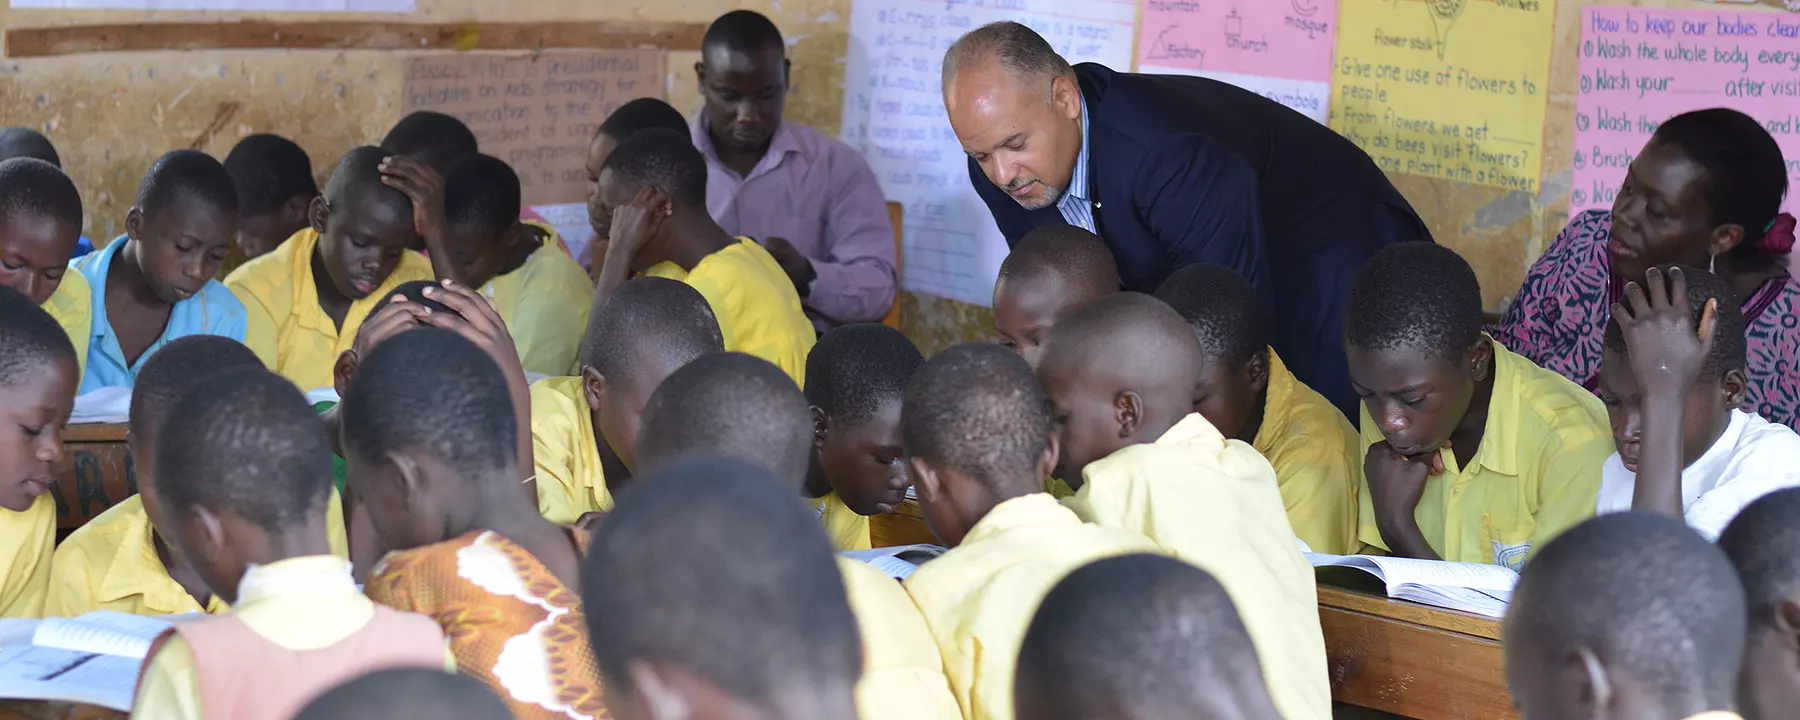 Paul Weisenfeld observes a classroom of students in Uganda